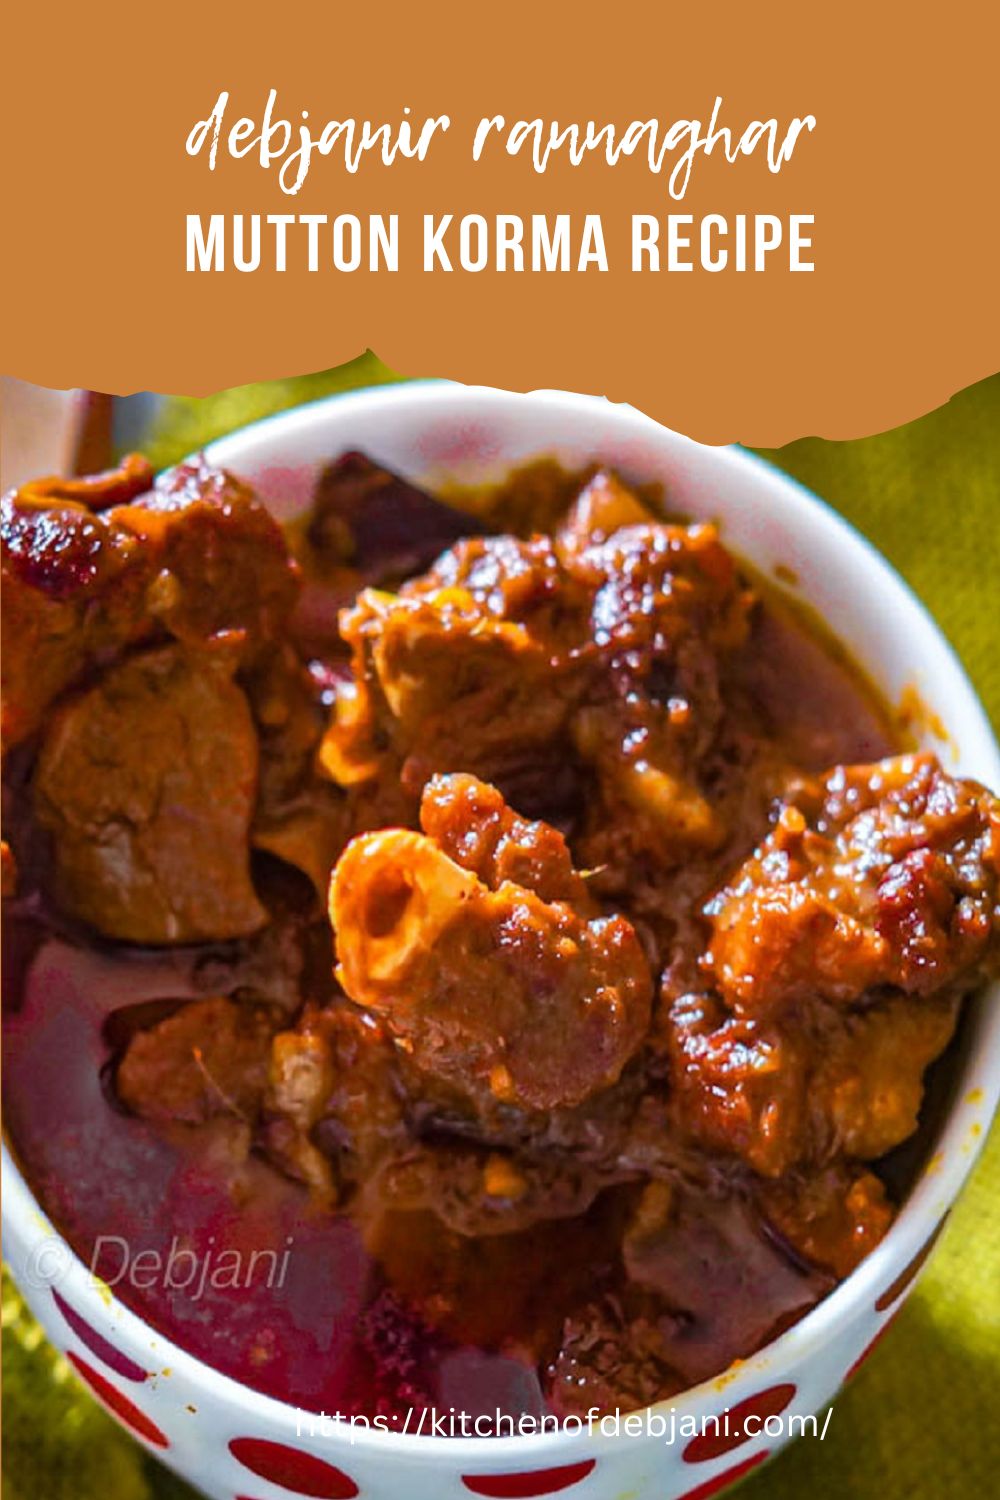 %Mutton Korma Recipe Debjanir Rannaghar Food Pinterest Pin